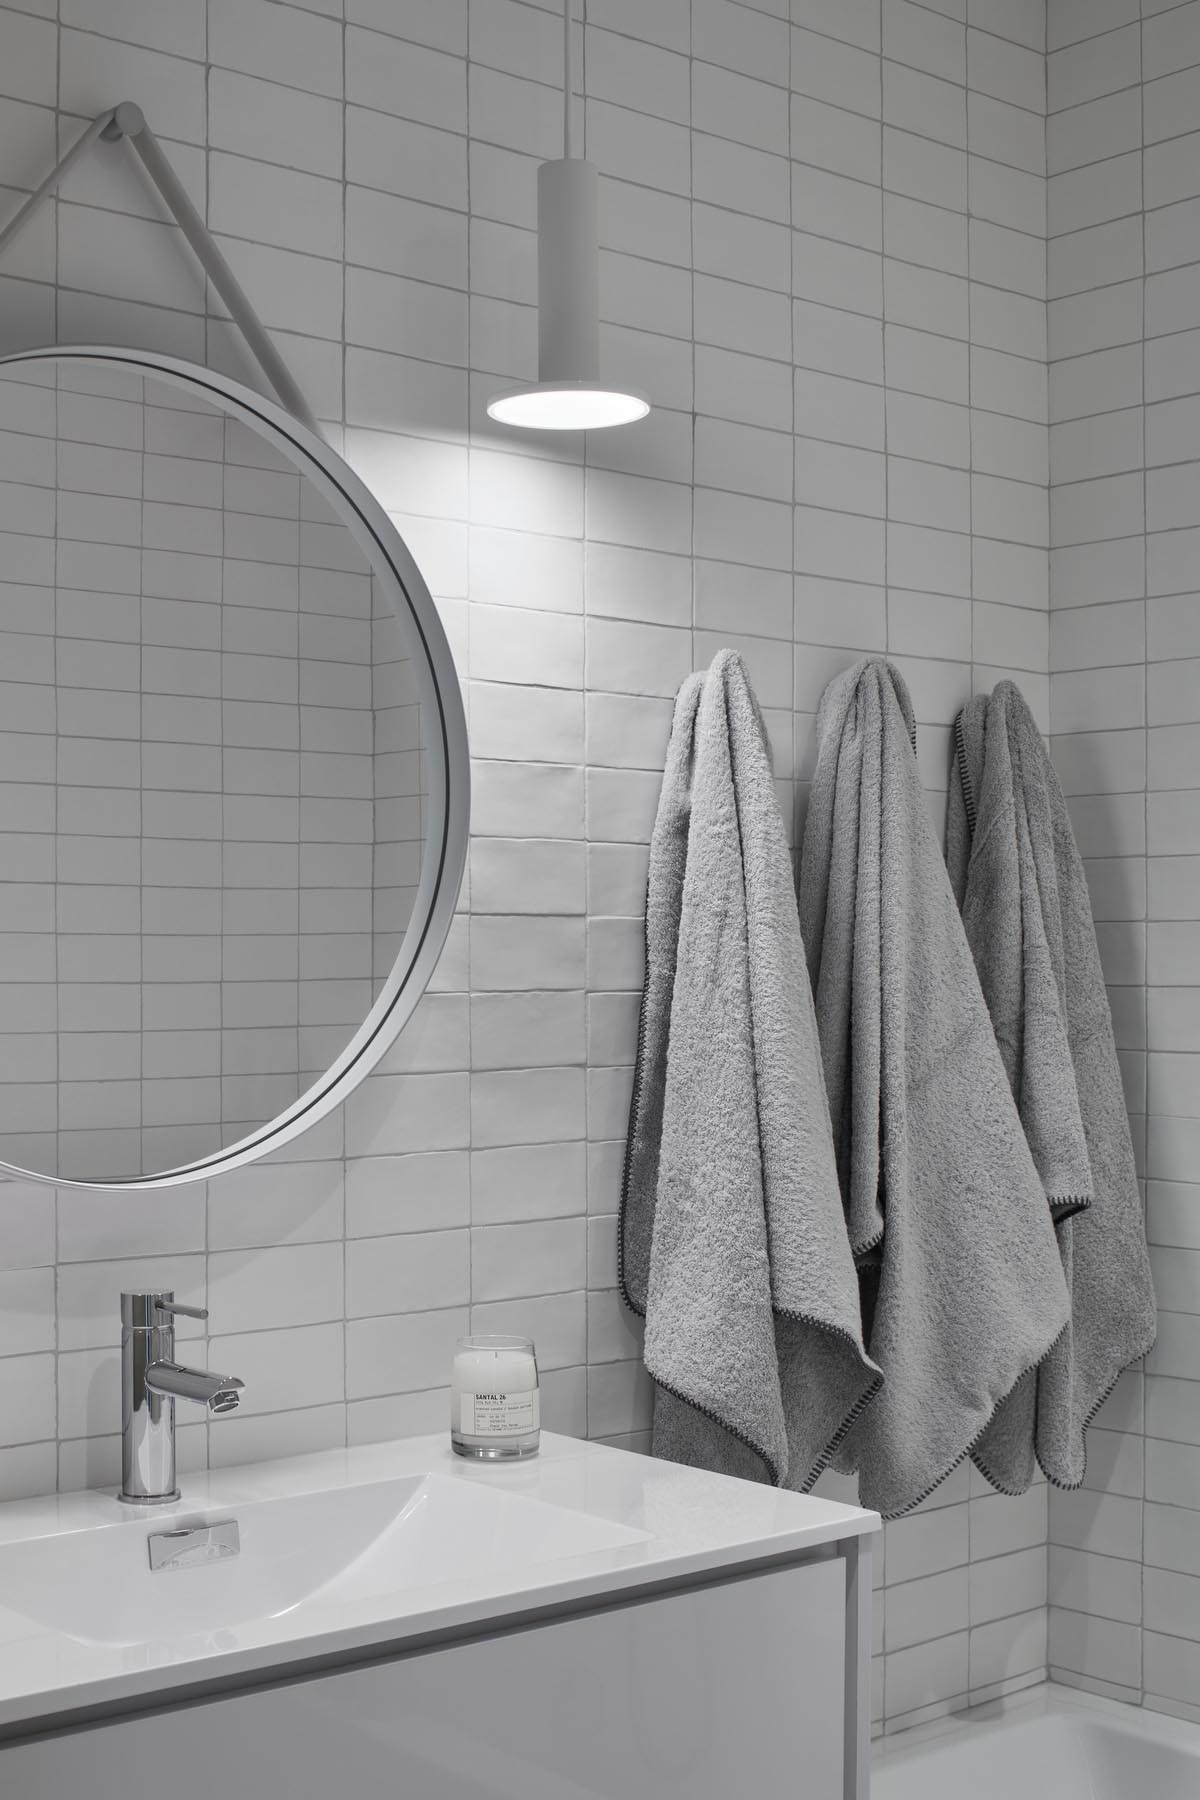 A modern white bathroom with white tiles, white pendant light, white framed round mirror, and white vanity.